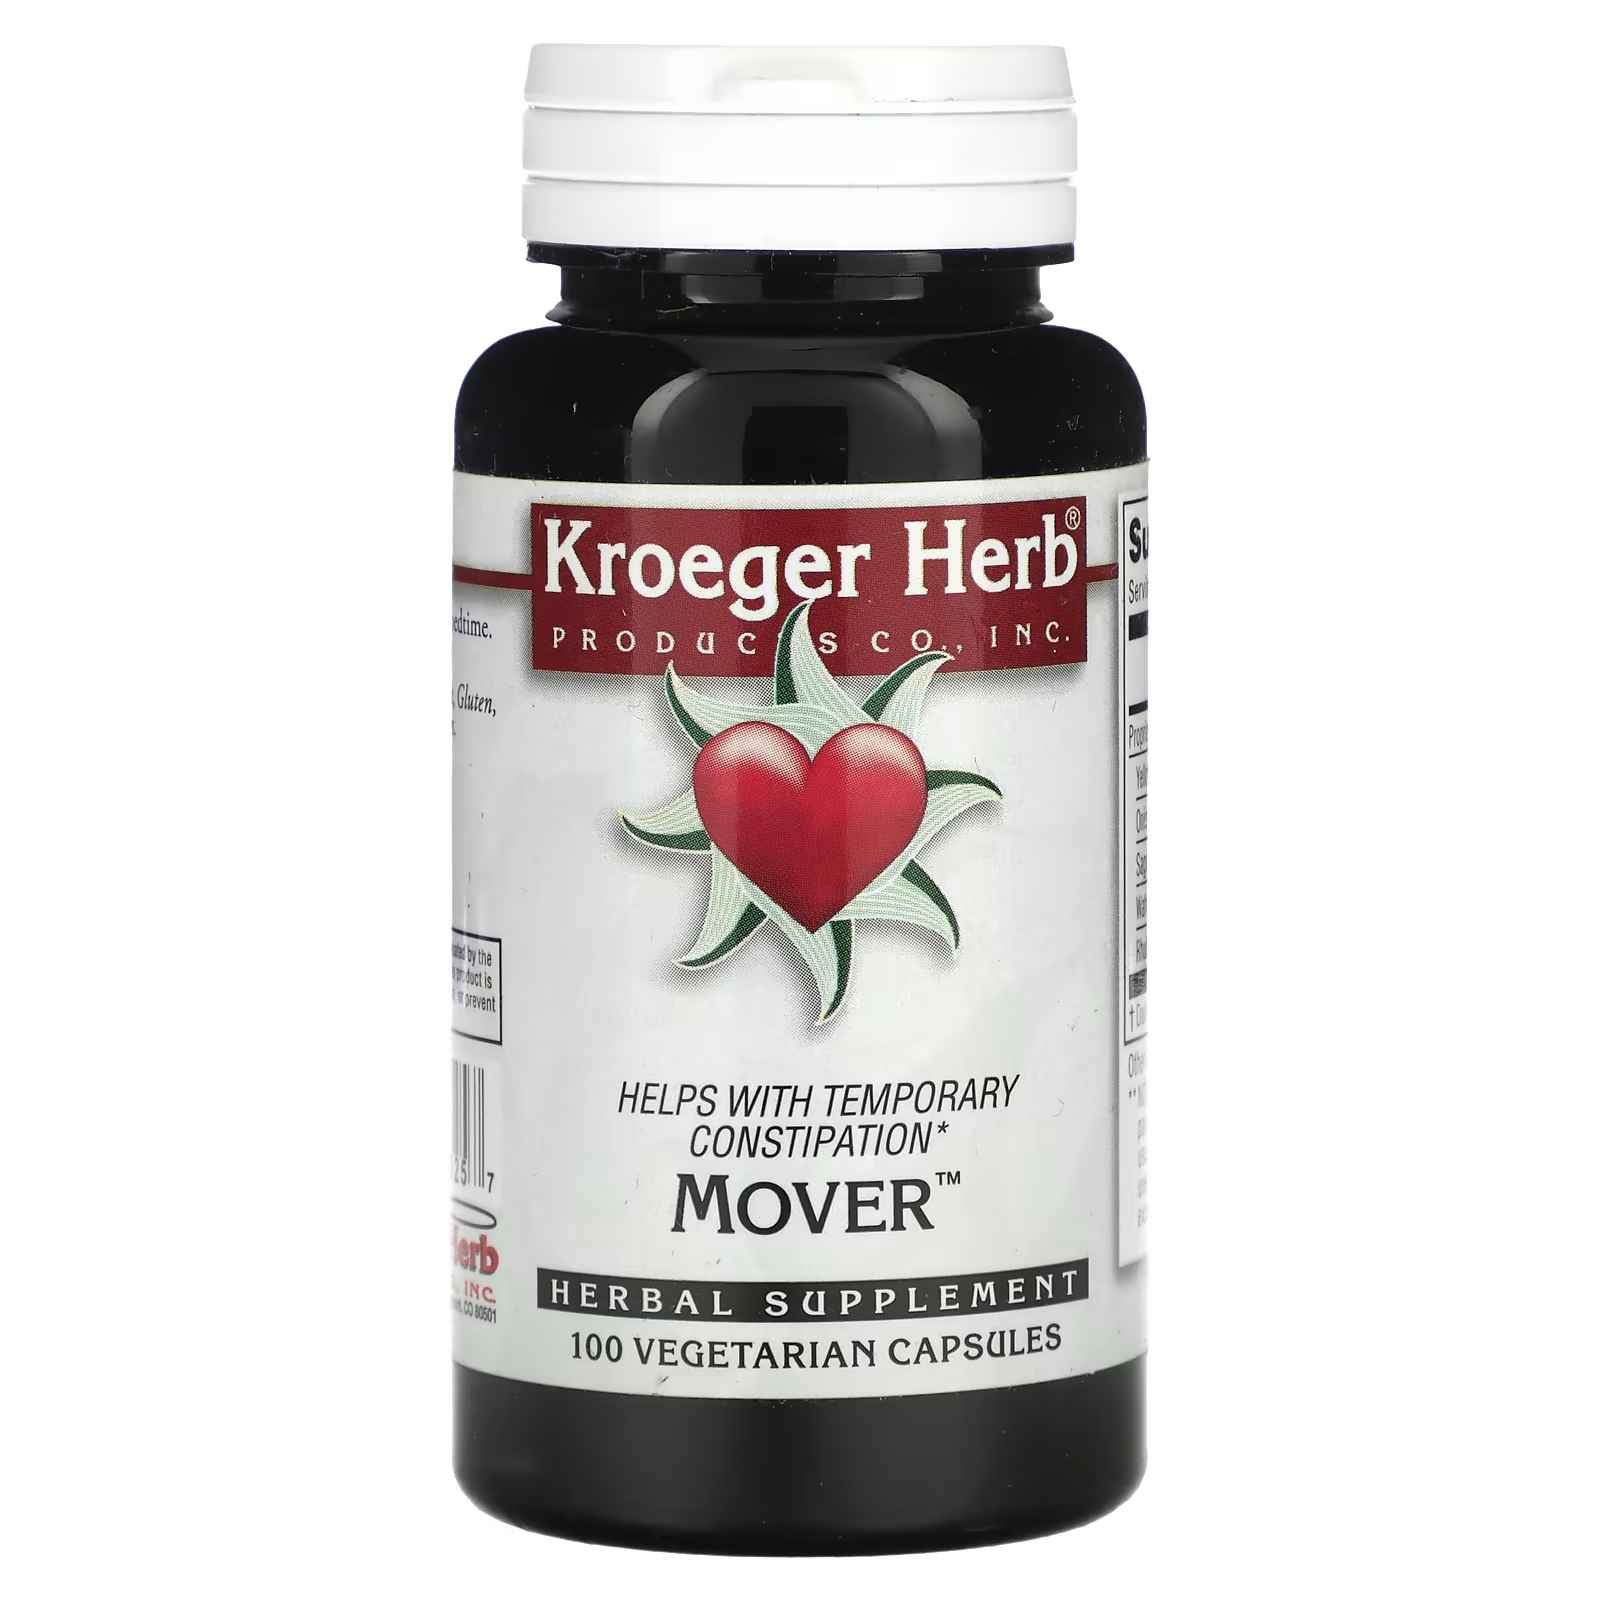 Растительная добавка Kroeger Herb Co Mover, 100 капсул растительная добавка kroeger herb co балансировщик полярности 100 капсул